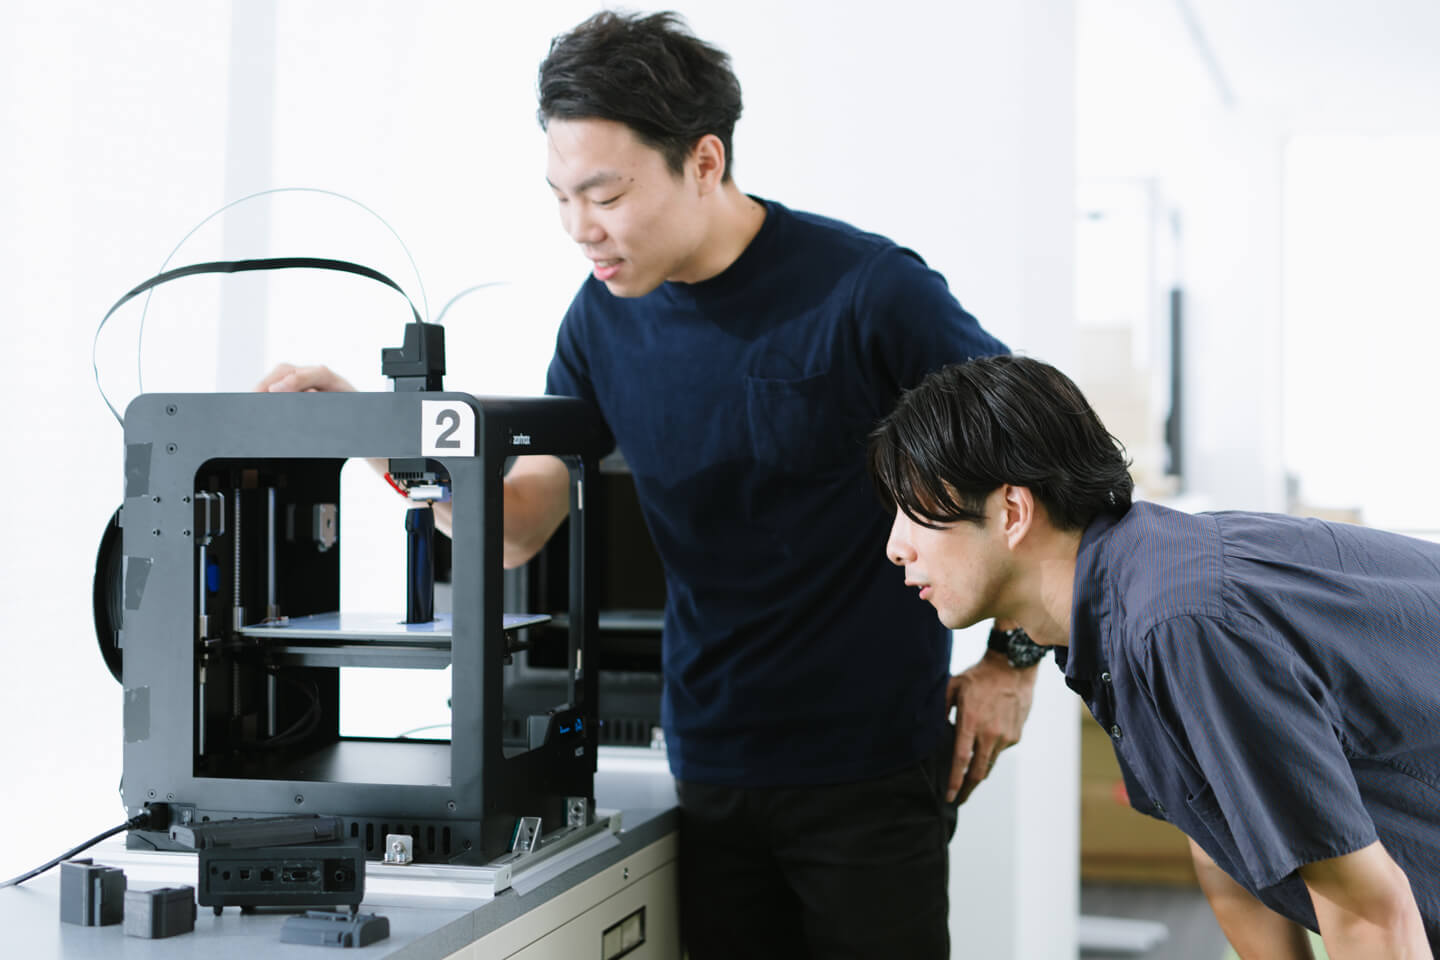 Photograph: Jun Shibayama and Naoaki Iwamatsu considering designs from a 3D printer